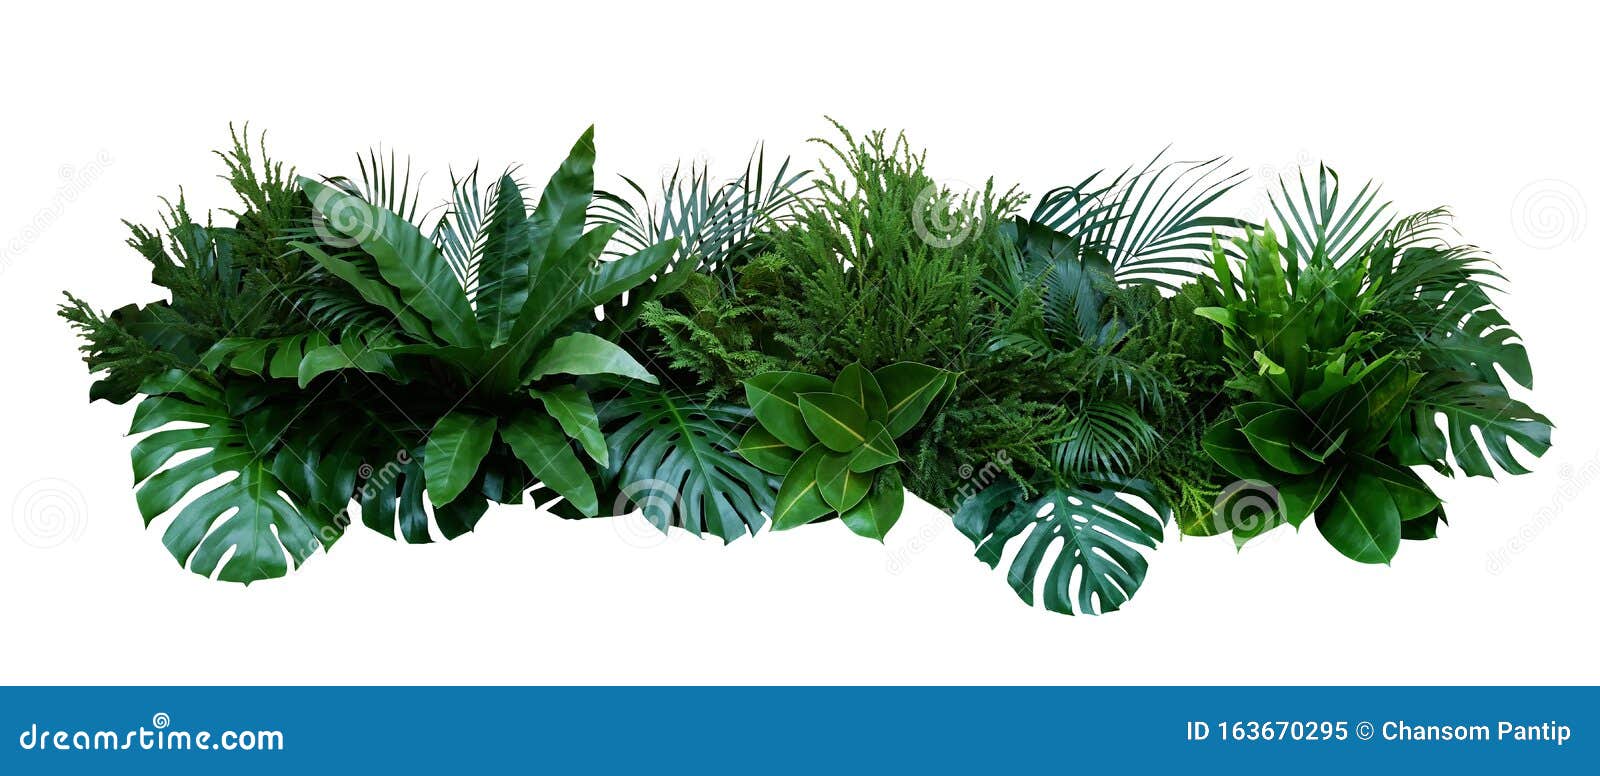 green leaves of tropical plants bush monstera, palm, fern, rubber plant, pine, birds nest fern floral arrangement indoors garden